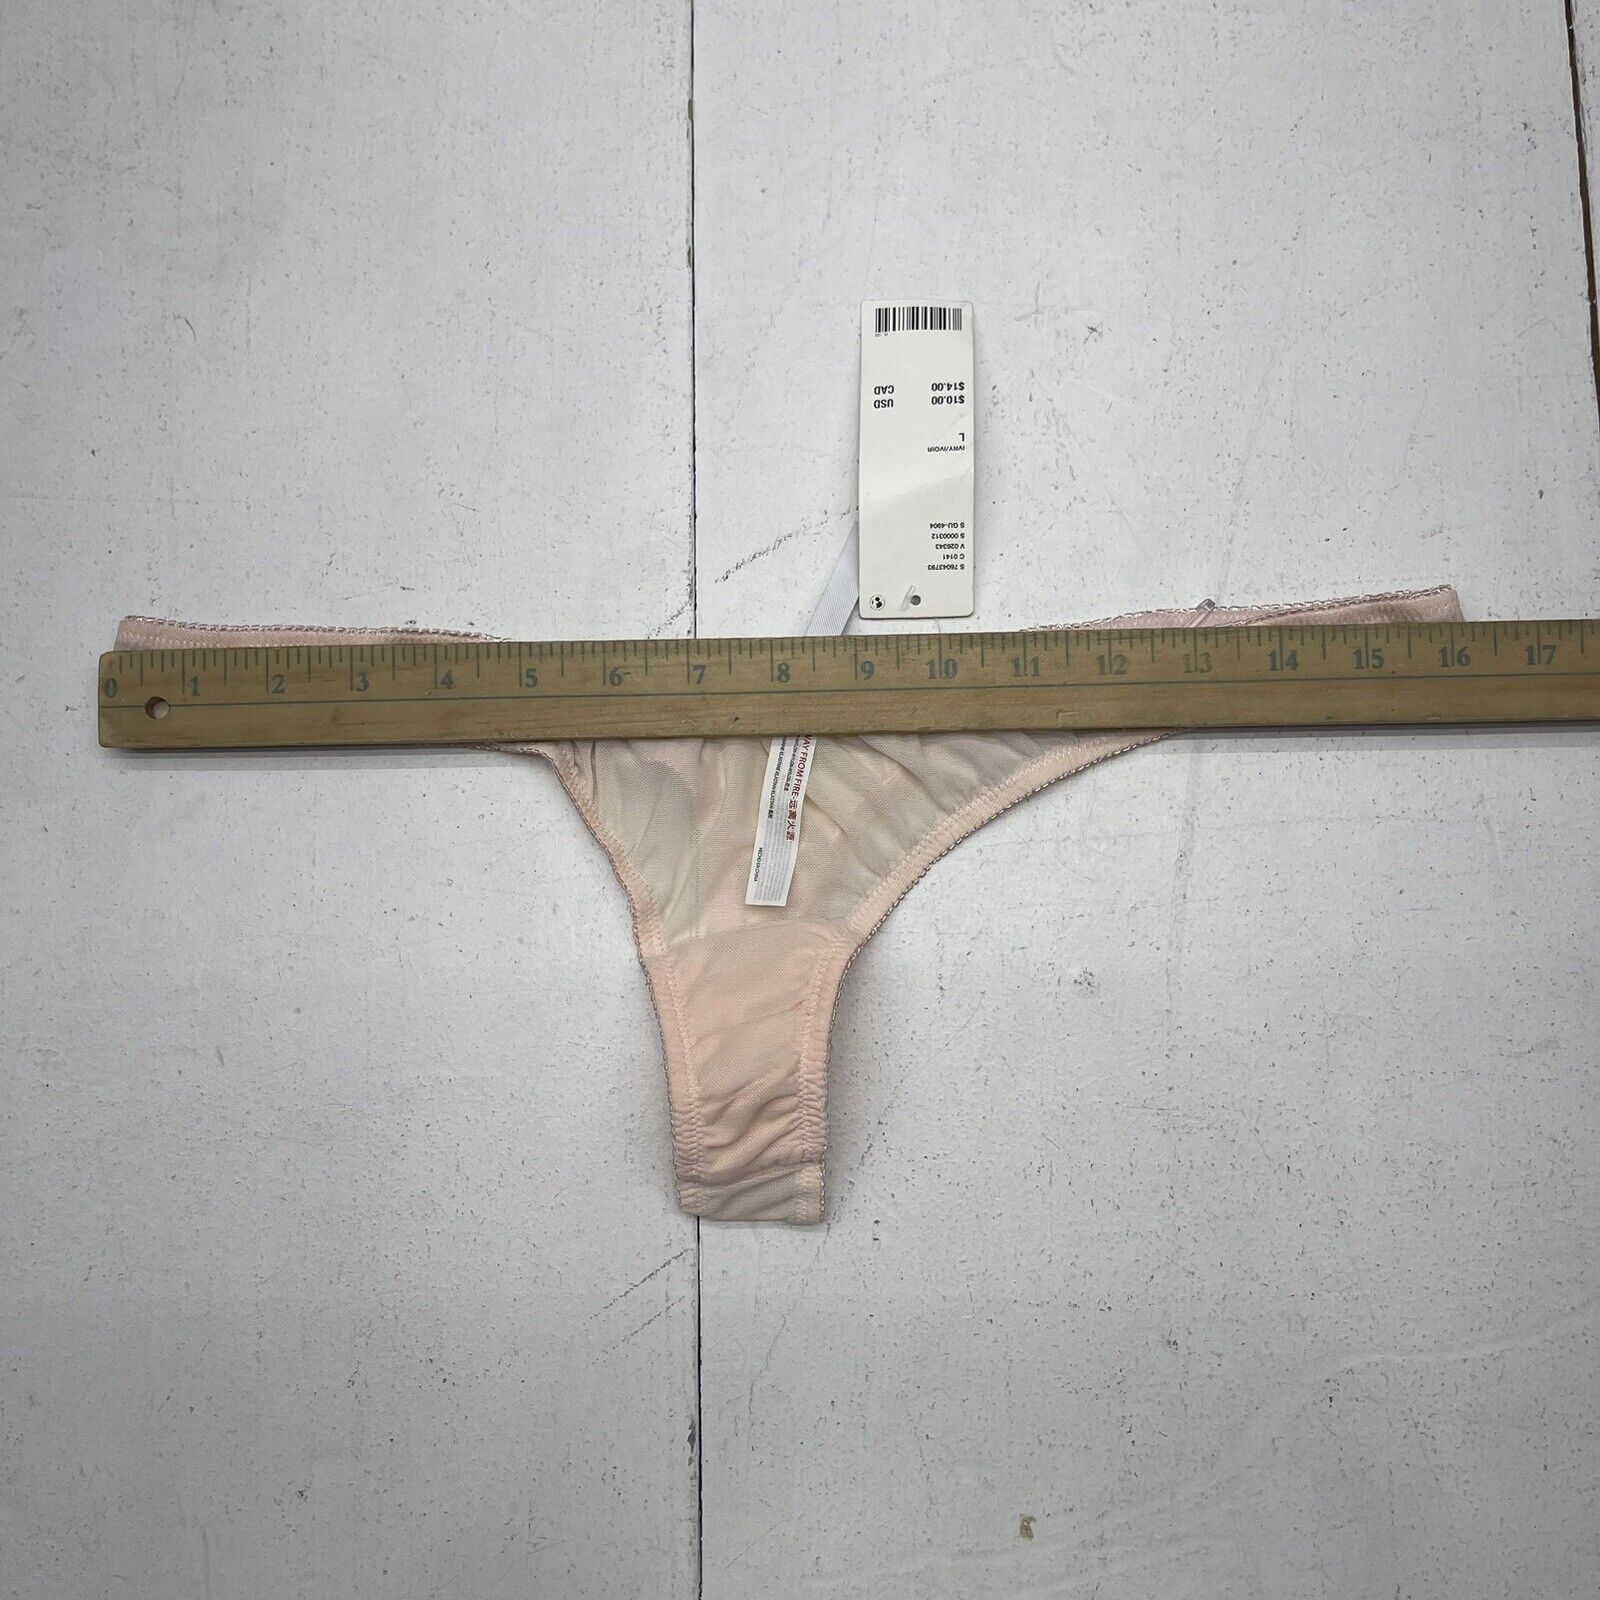 Bombas Womens Pink Thong Underwear Size XL - beyond exchange